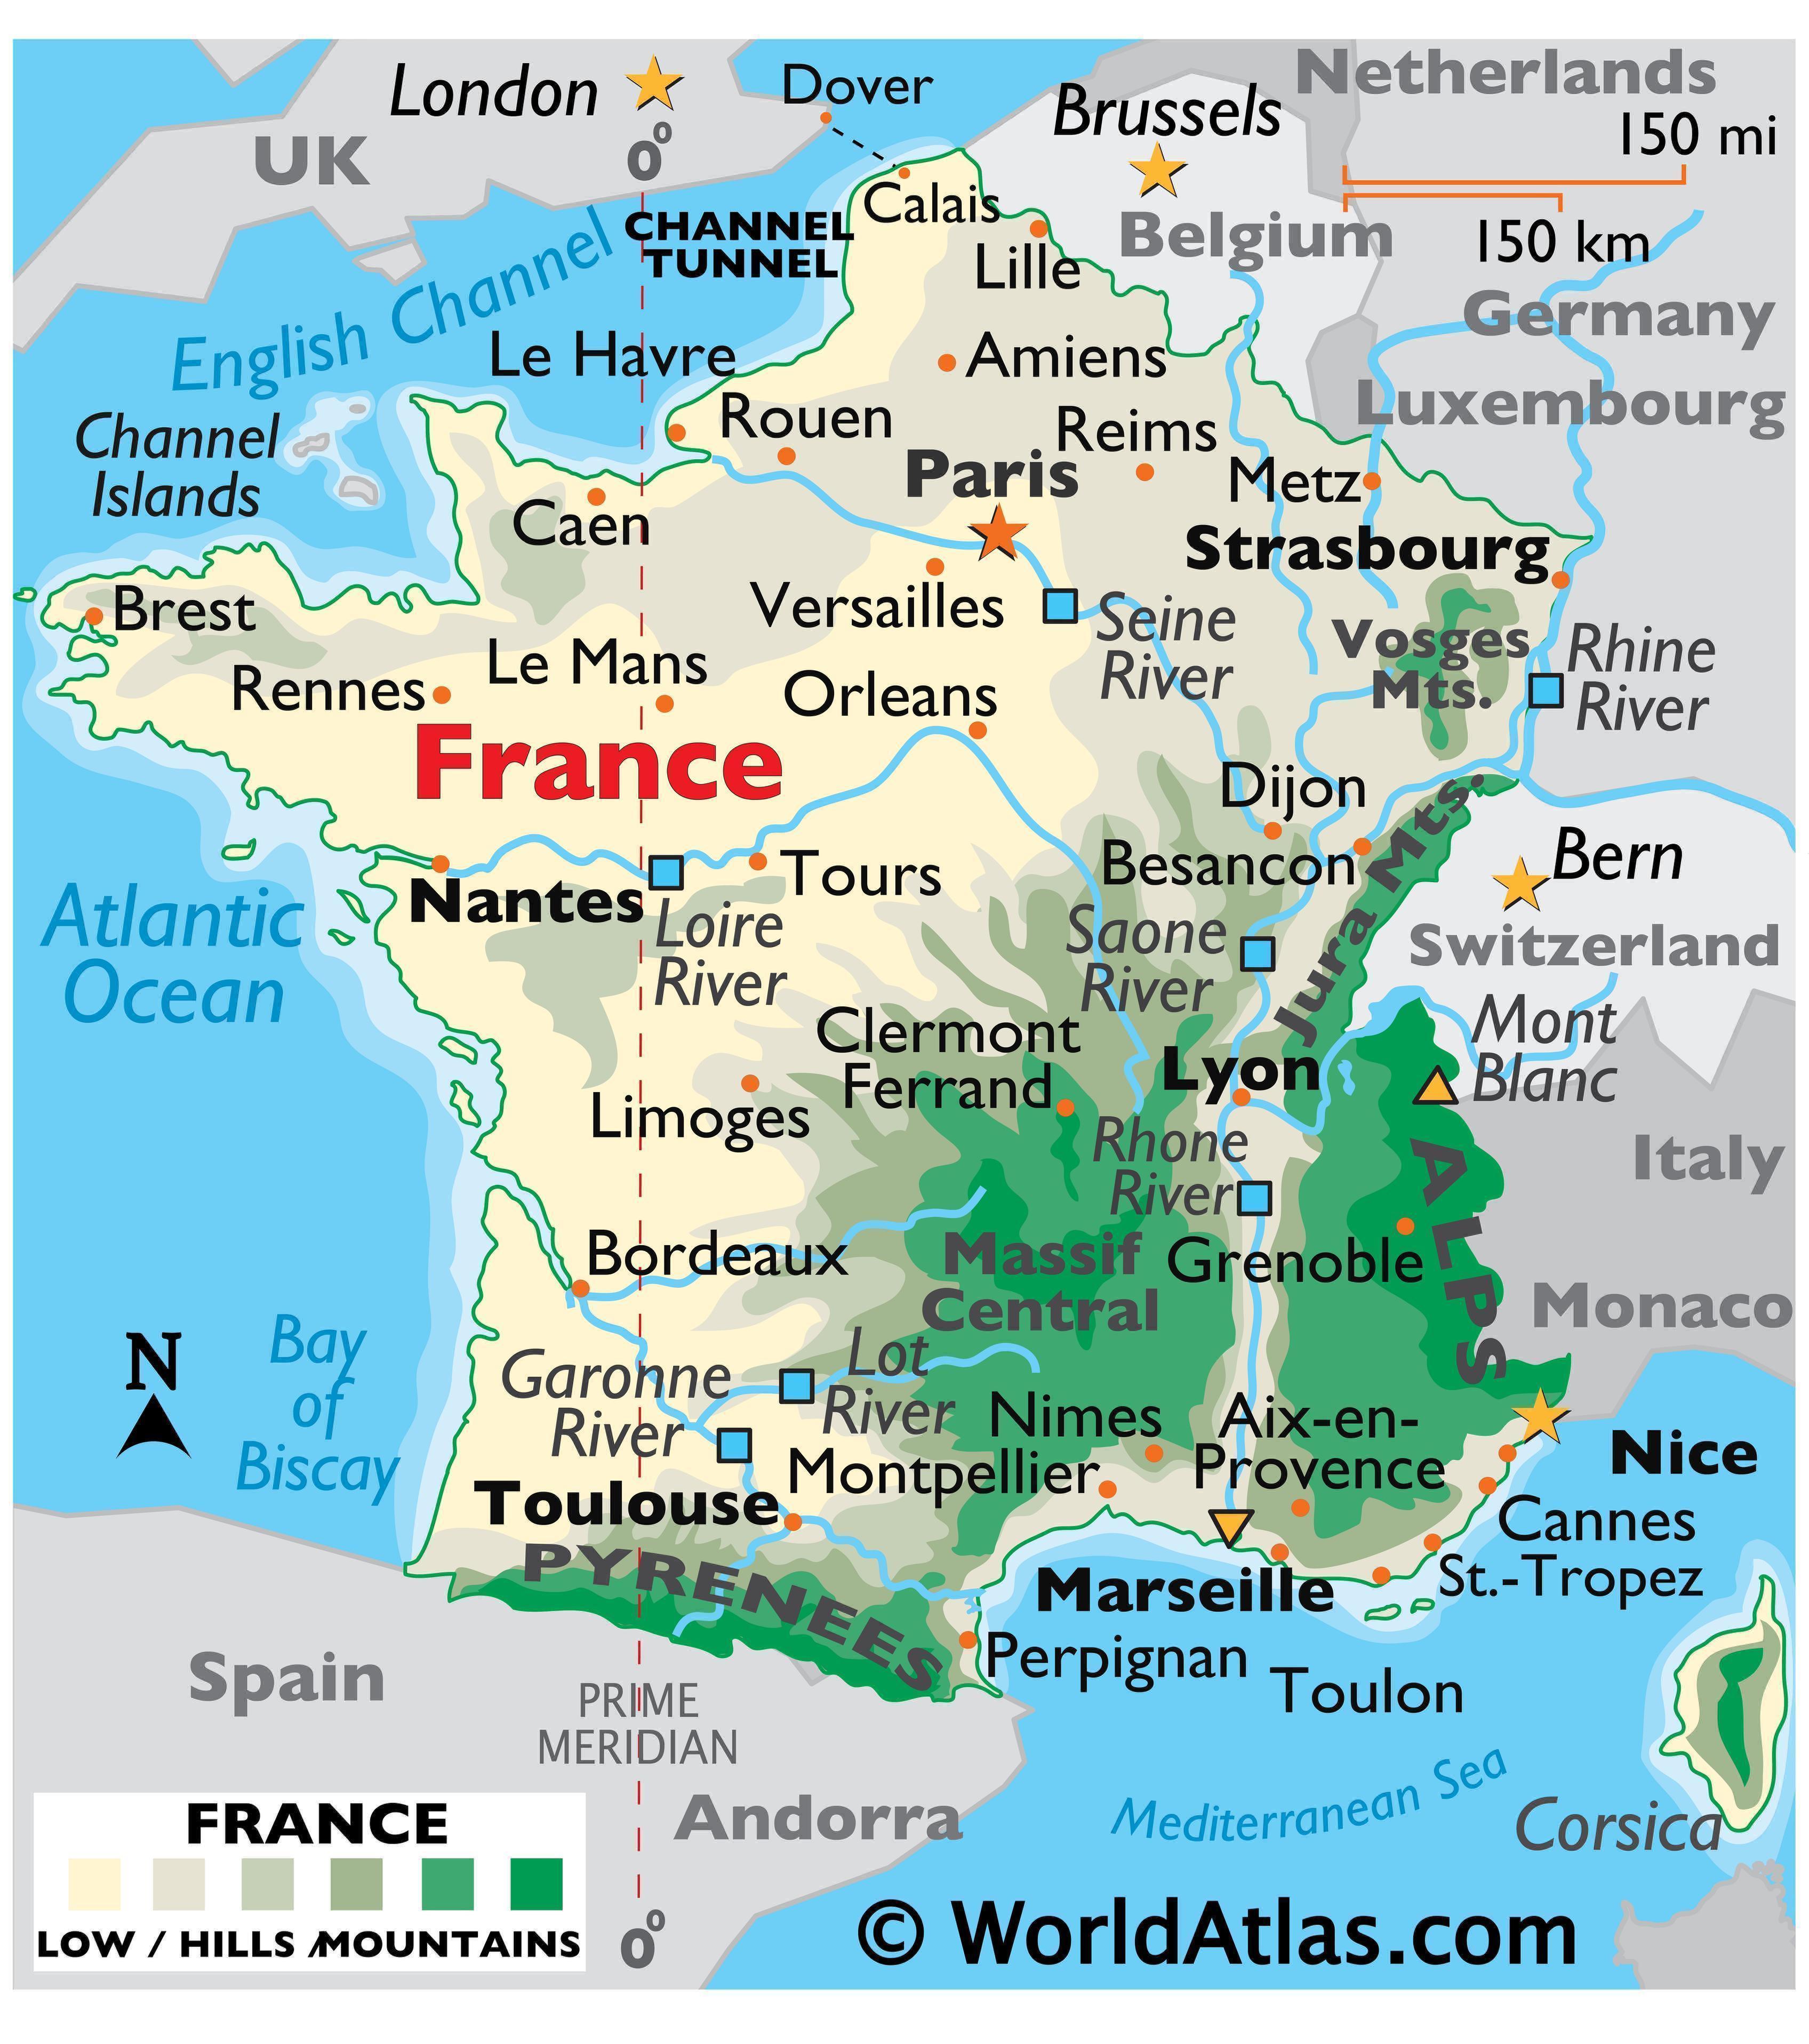 pis-vadodara-std-9-map-work-of-french-revolution